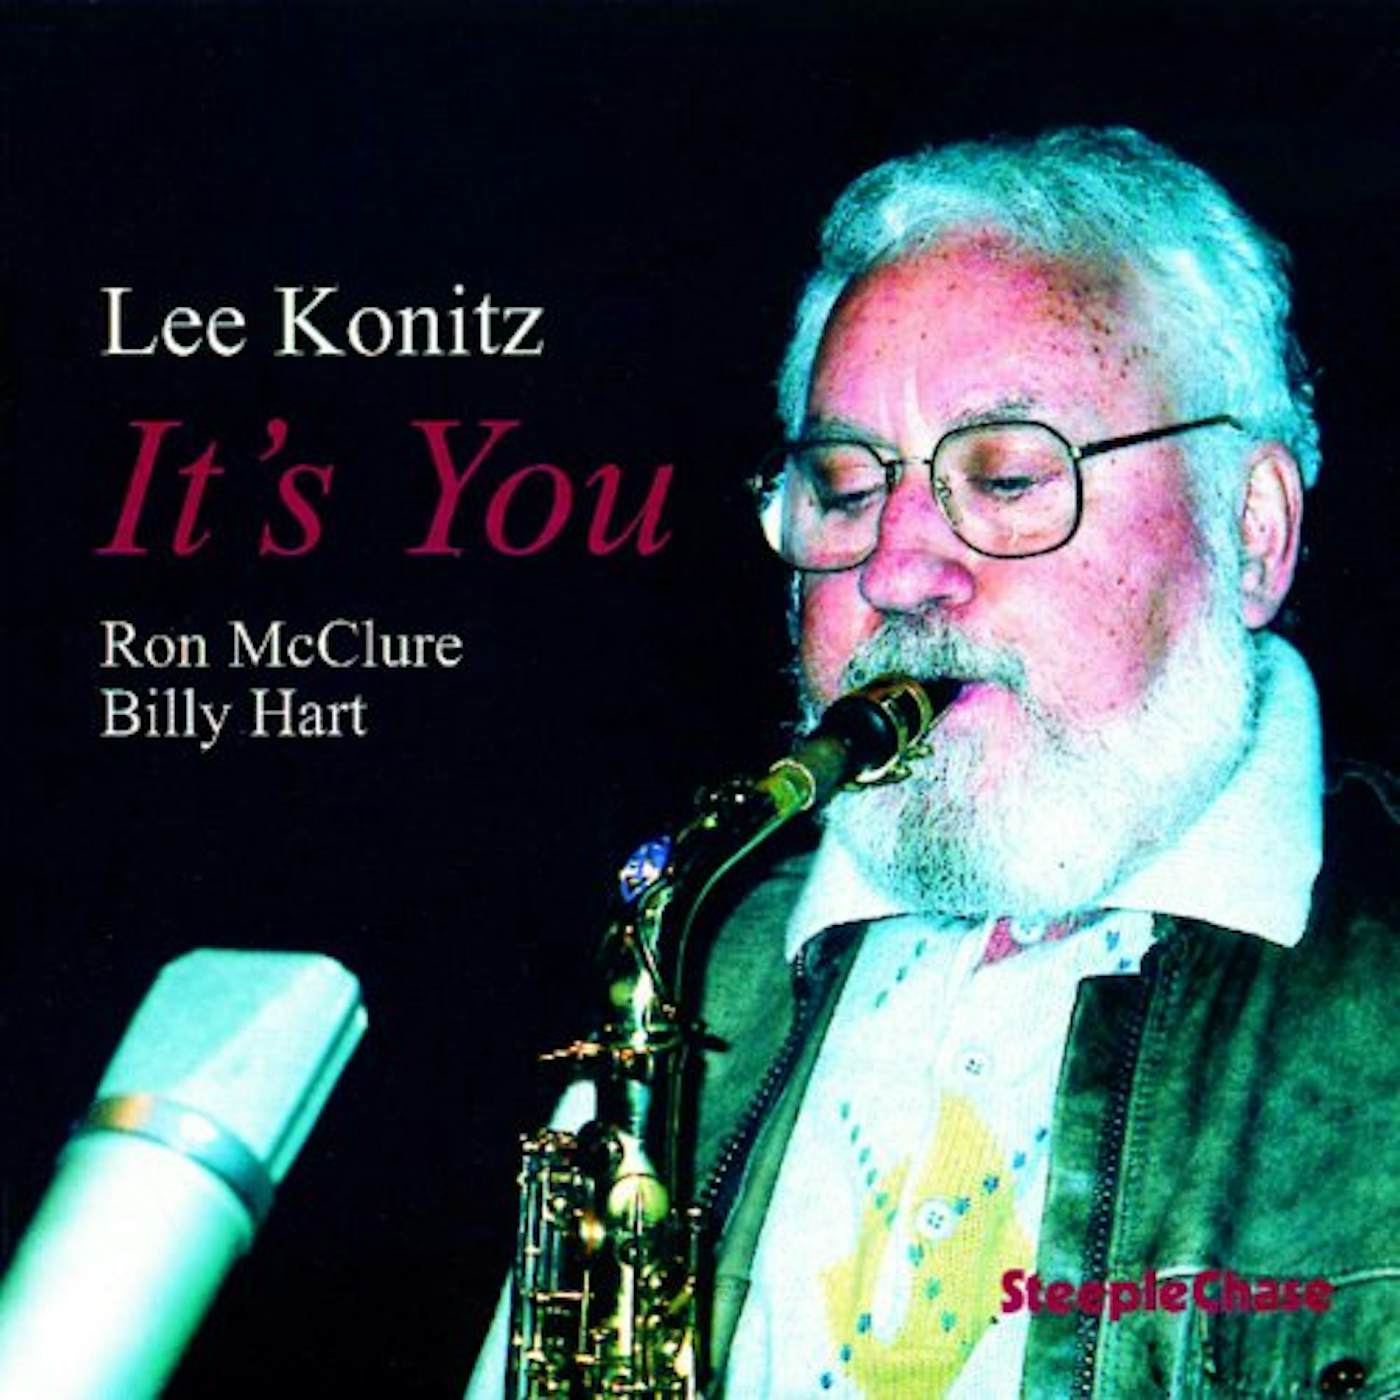 Lee Konitz IT'S YOU CD